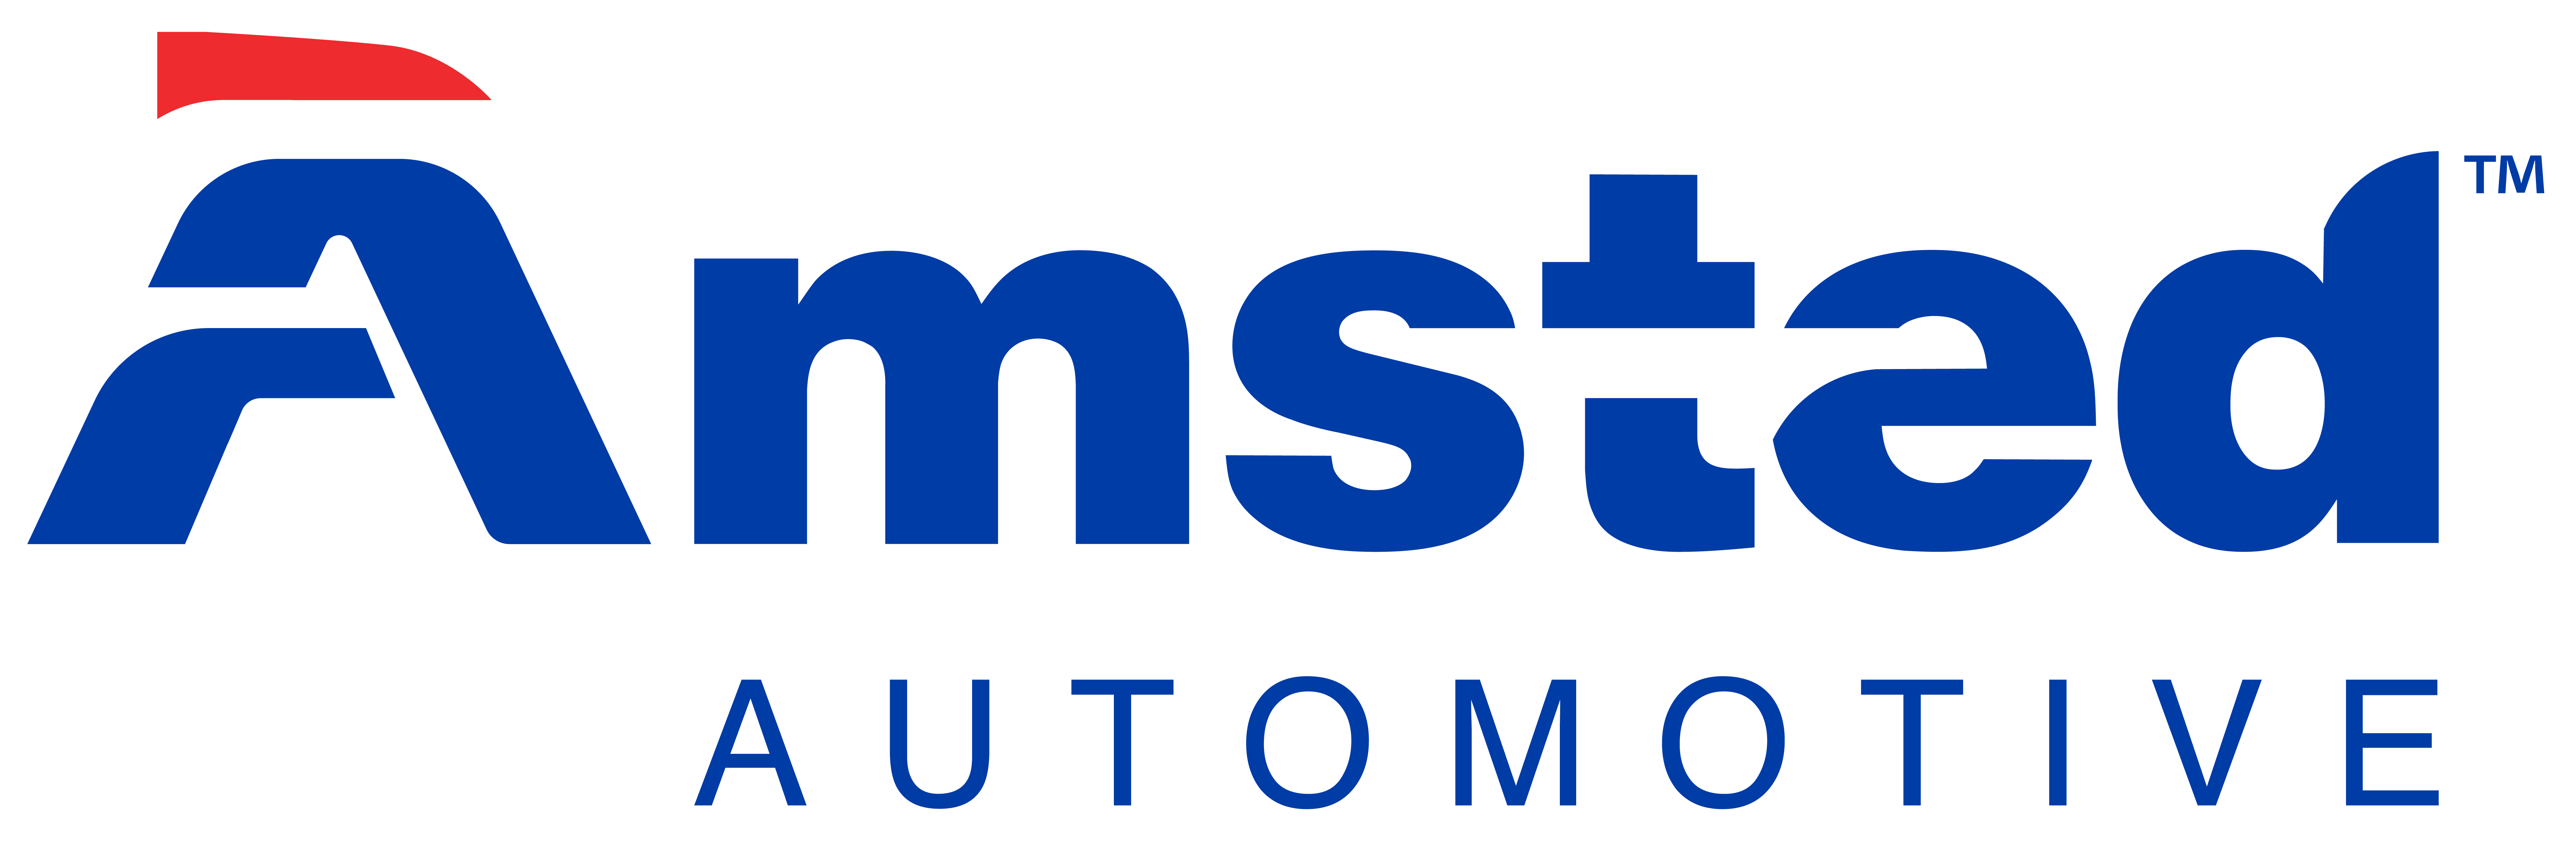 Amsted Automotive Group logo.